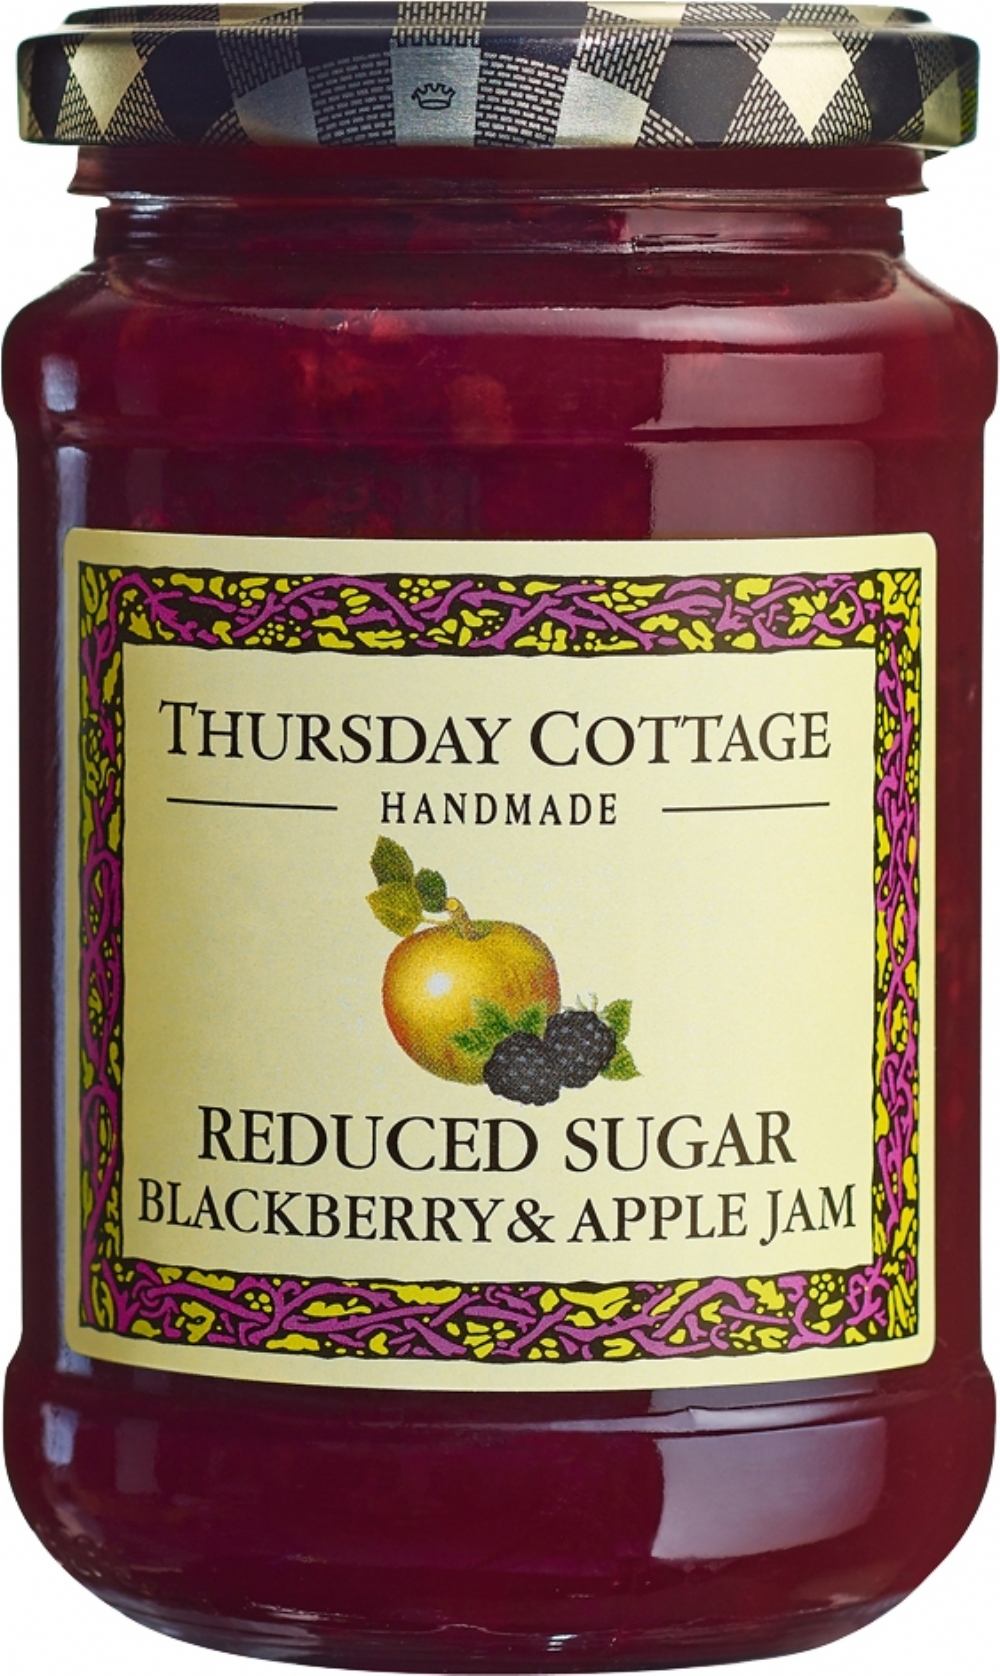 THURSDAY COTTAGE Blackberry & Apple Jam - Reduced Sugar